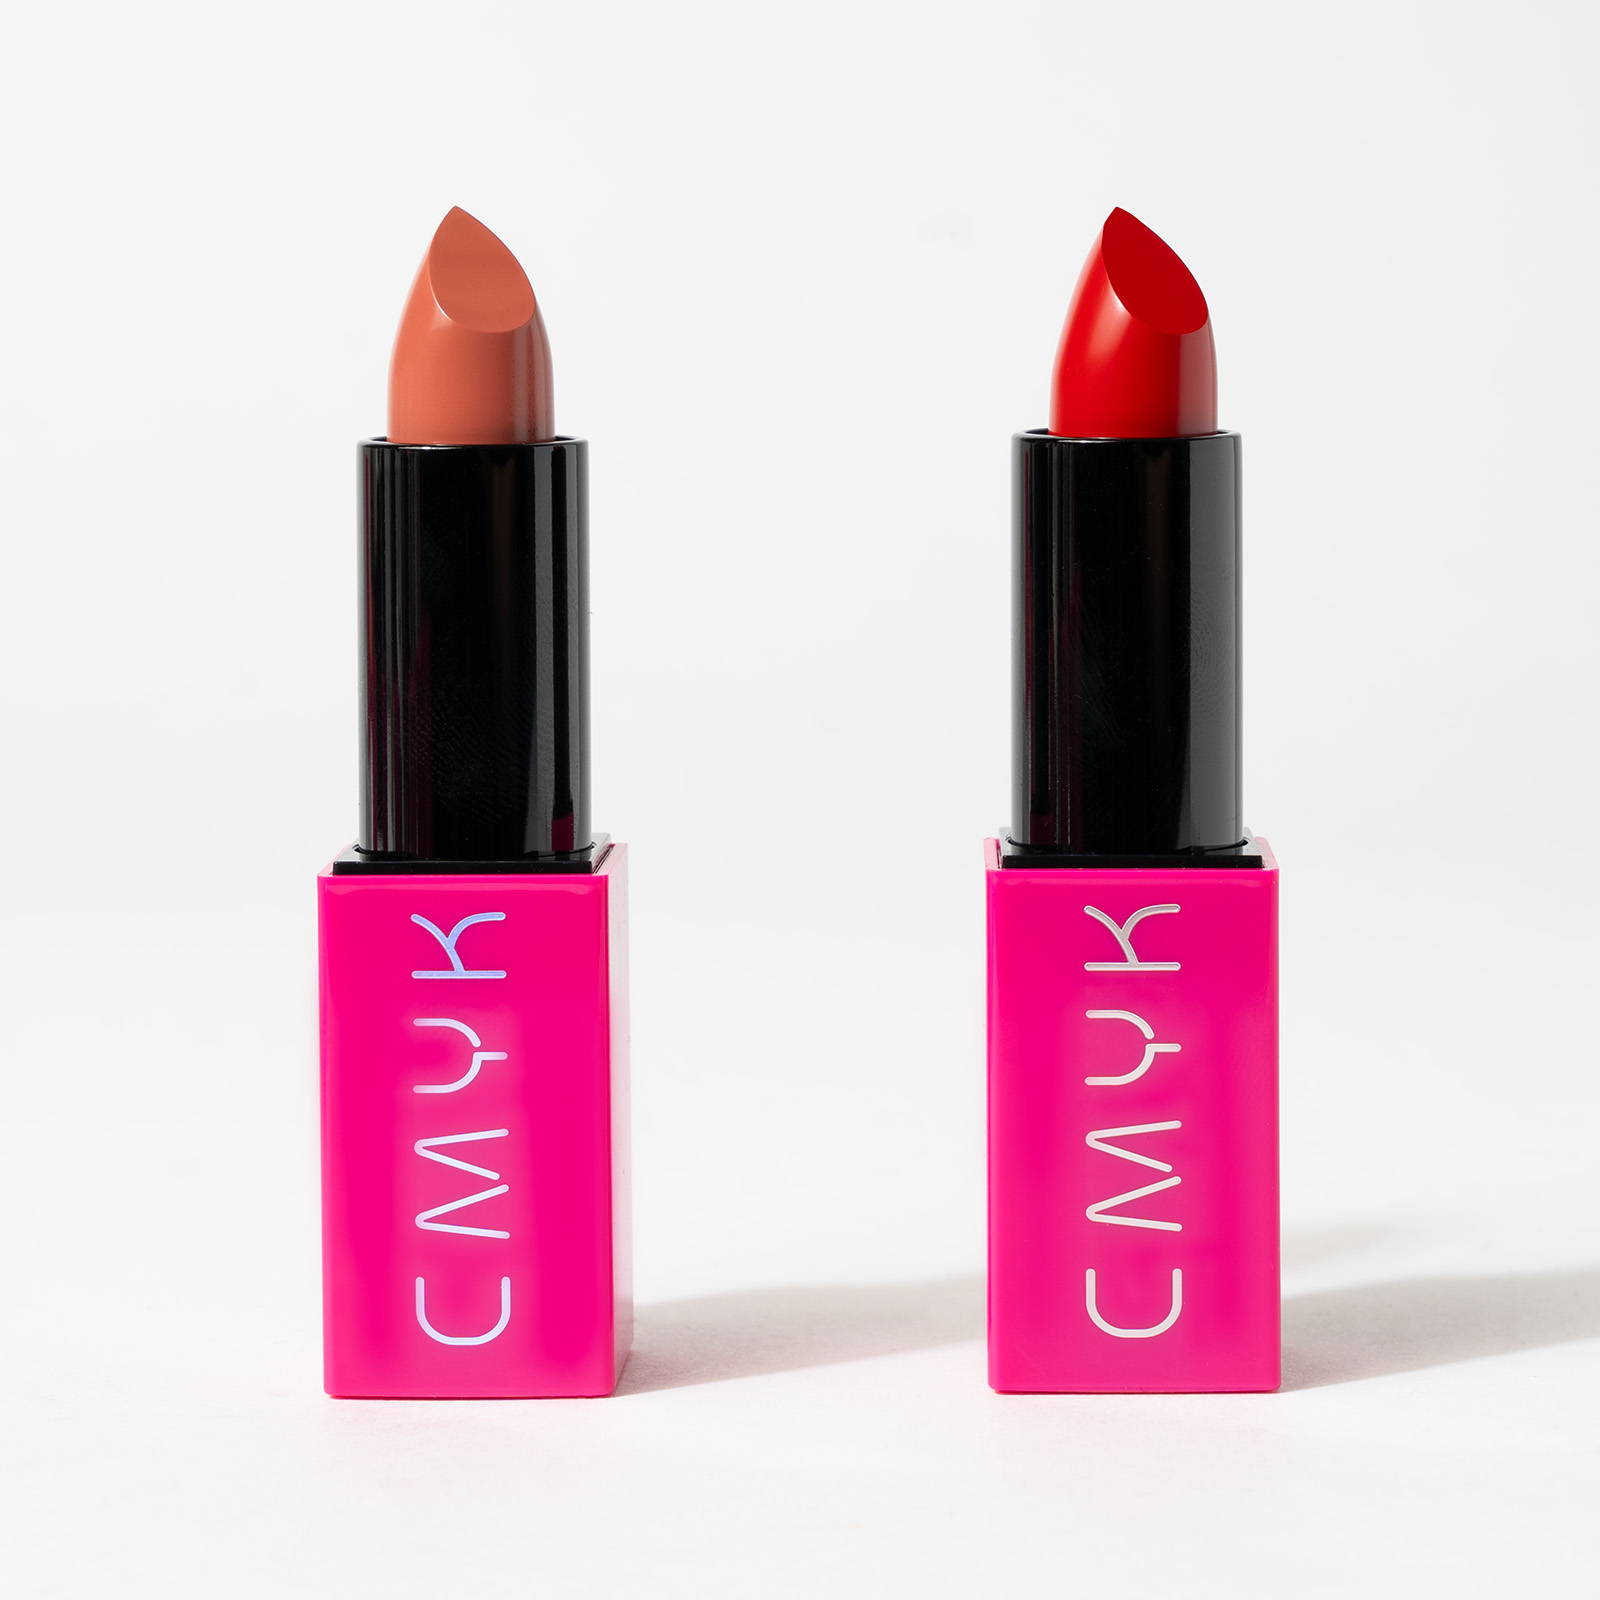 Day and Night Limitless Vegan Lipstick Duo